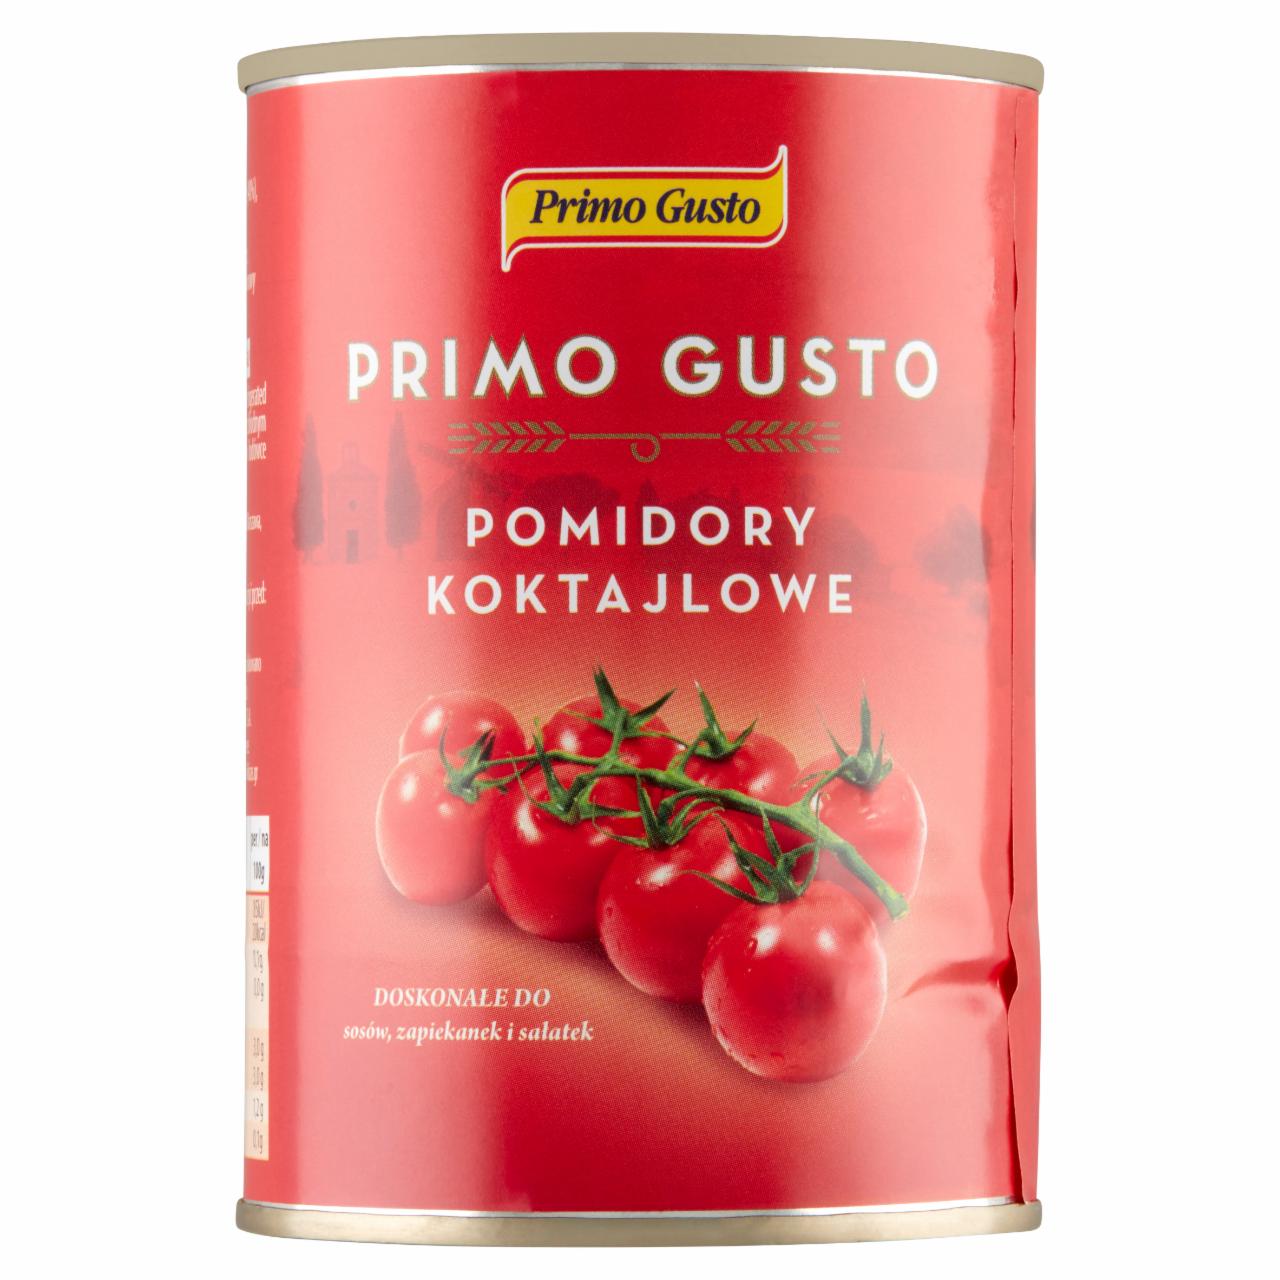 Zdjęcia - Pomidory koktajlowe Primo Gusto